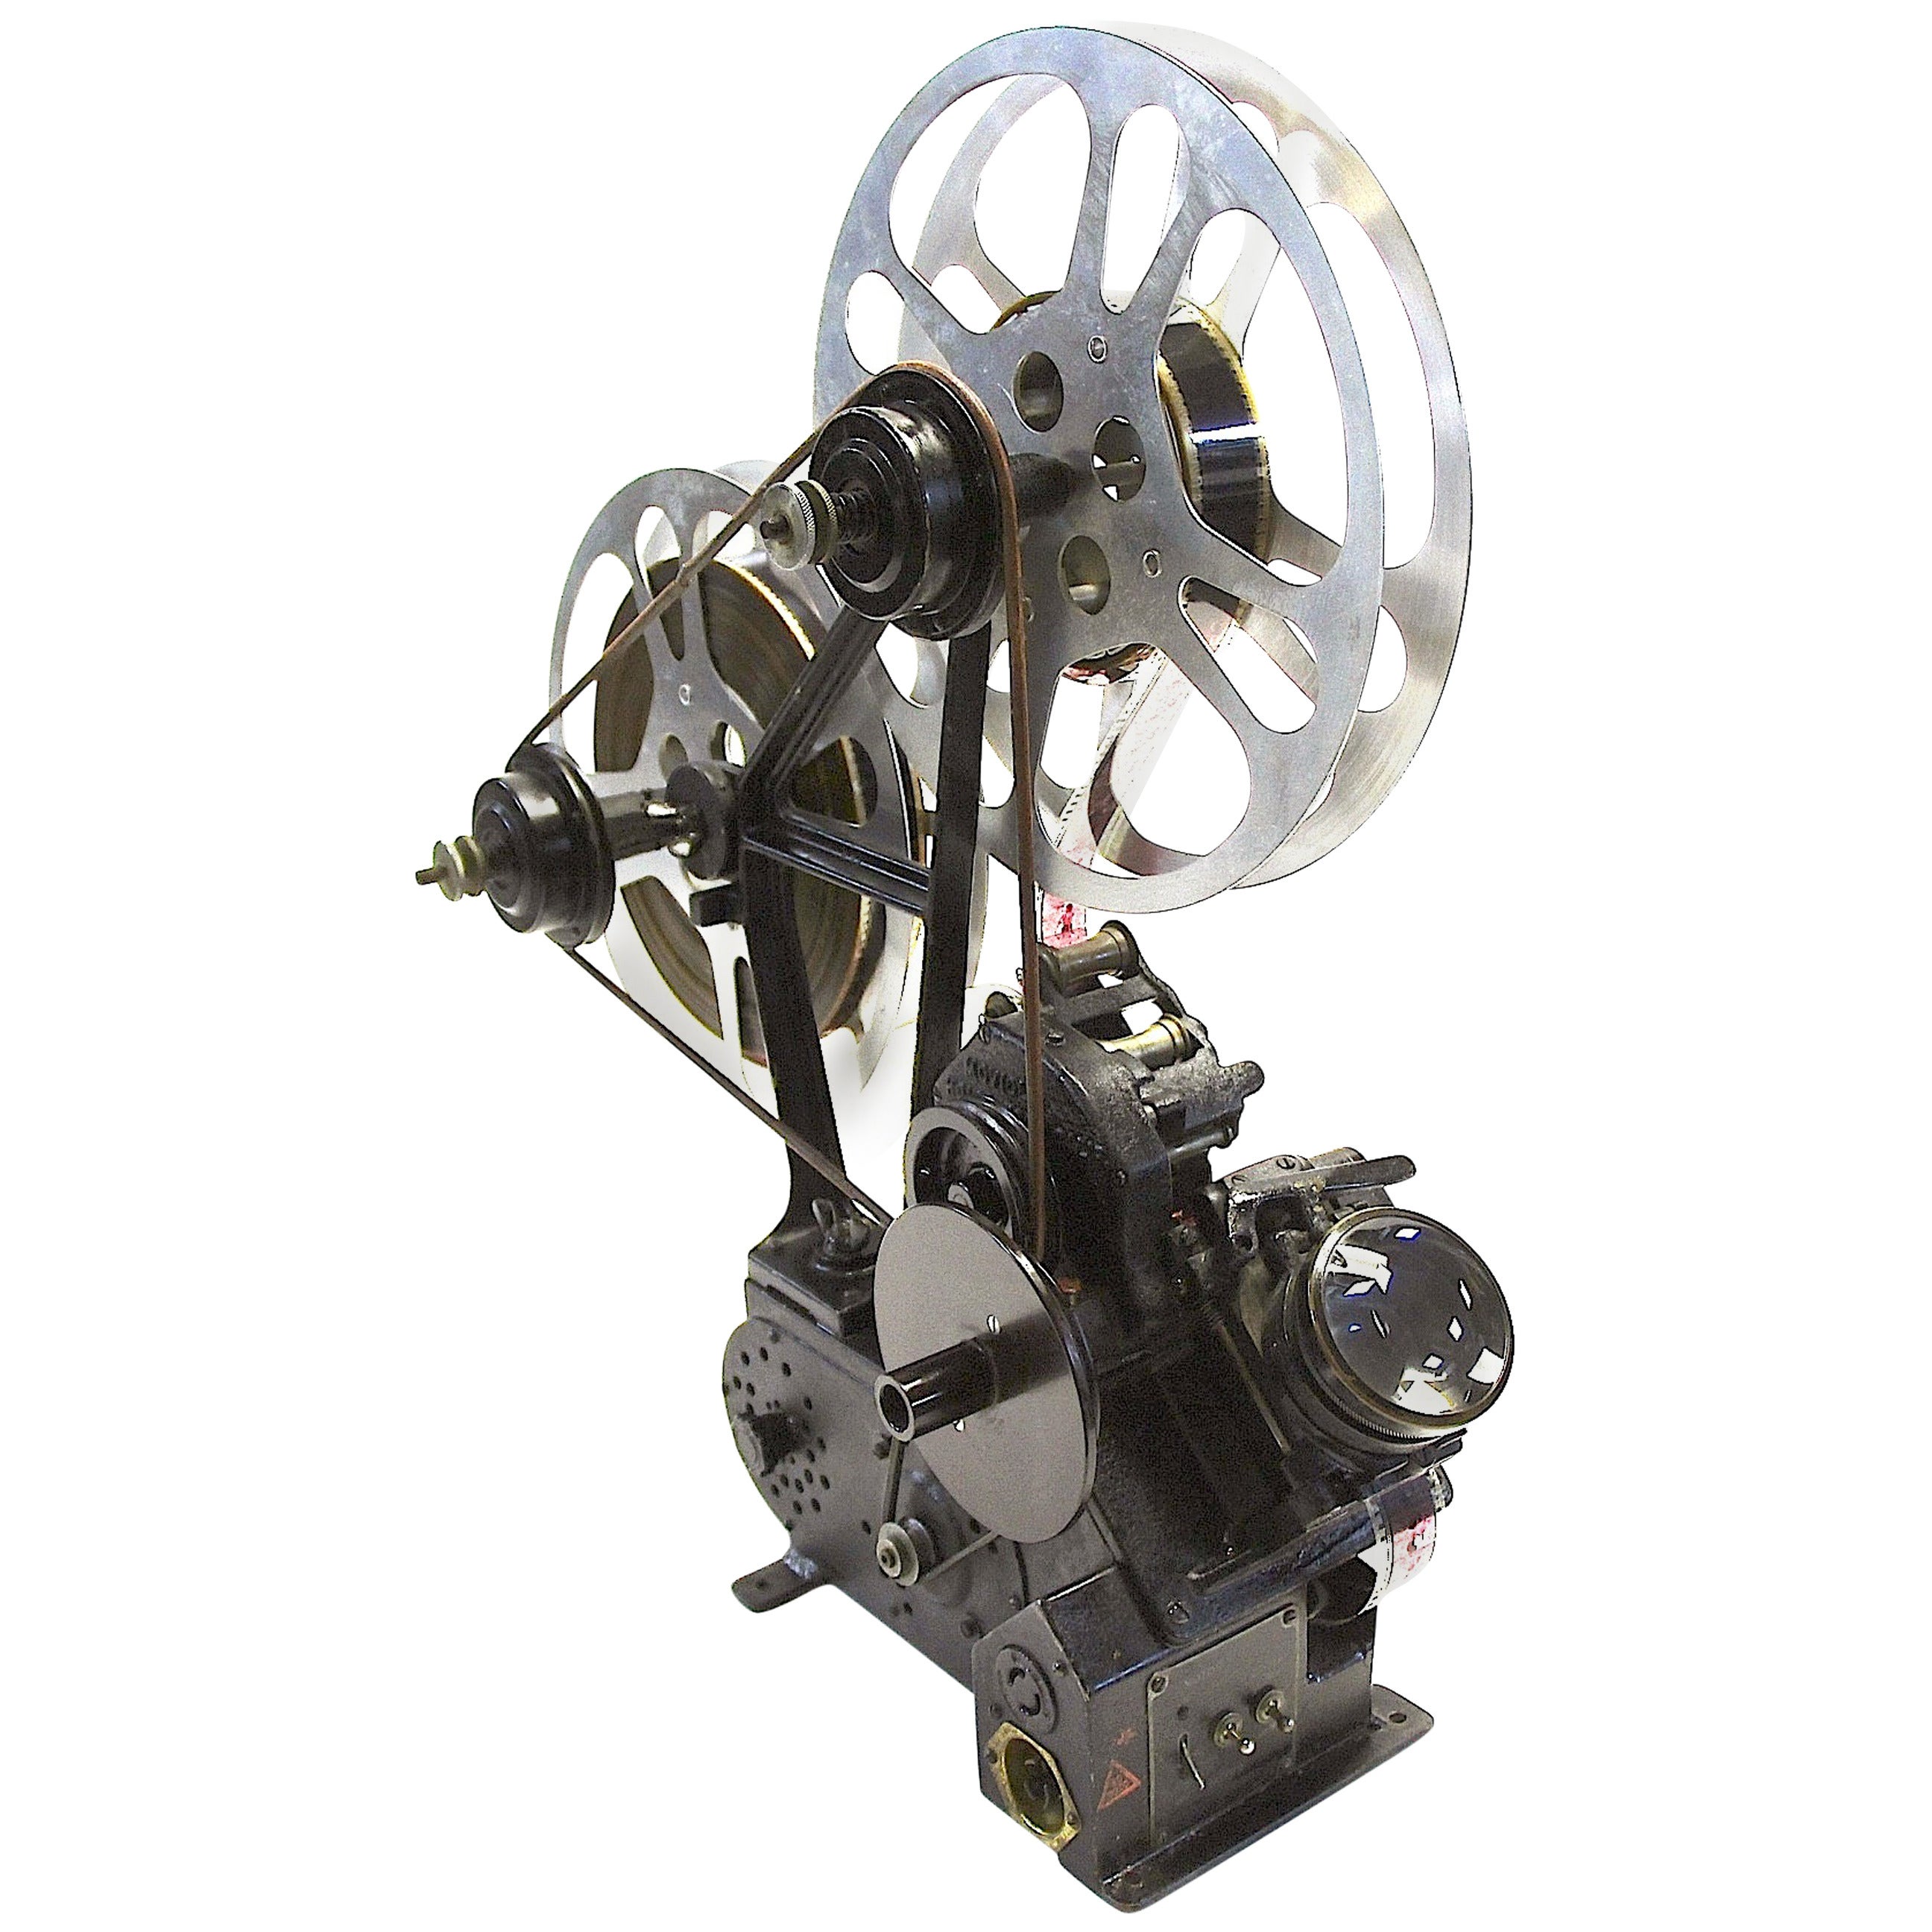 Moviola Bullseye 35mm Film Editing Viewer Designed 1919 Built in 1932. Sculpture For Sale